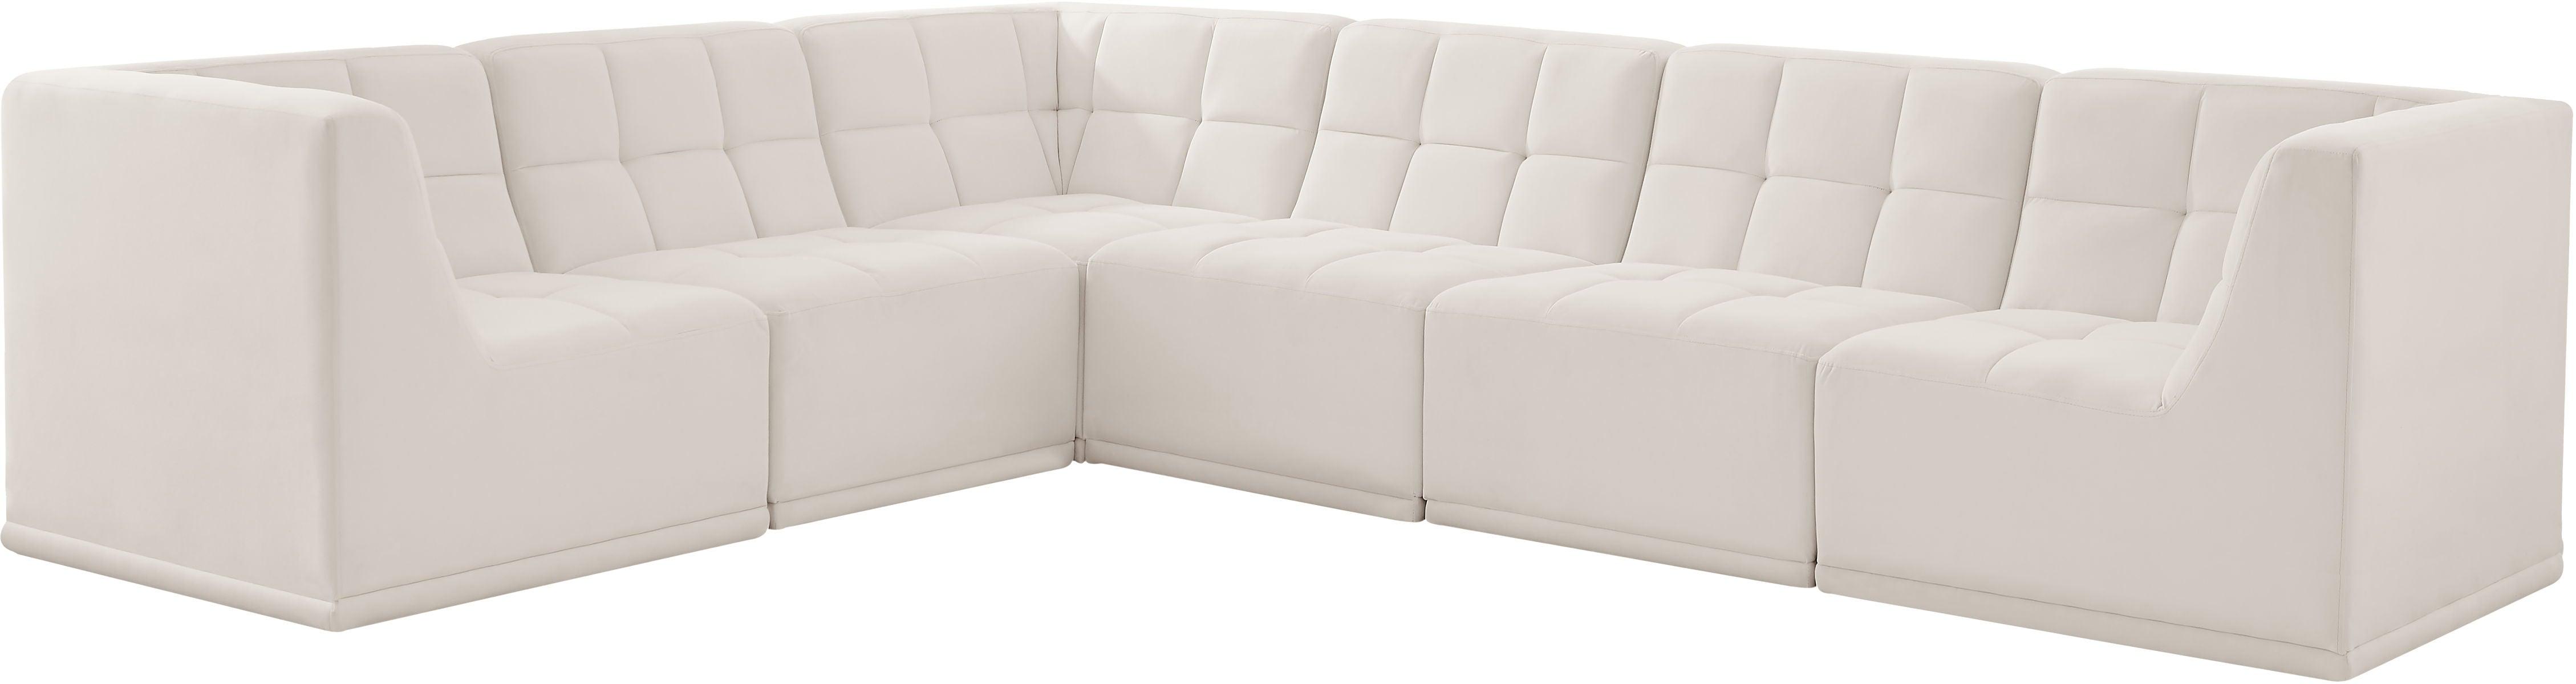 Meridian Furniture - Relax - Modular Sectional 6 Piece - Cream - Fabric - 5th Avenue Furniture